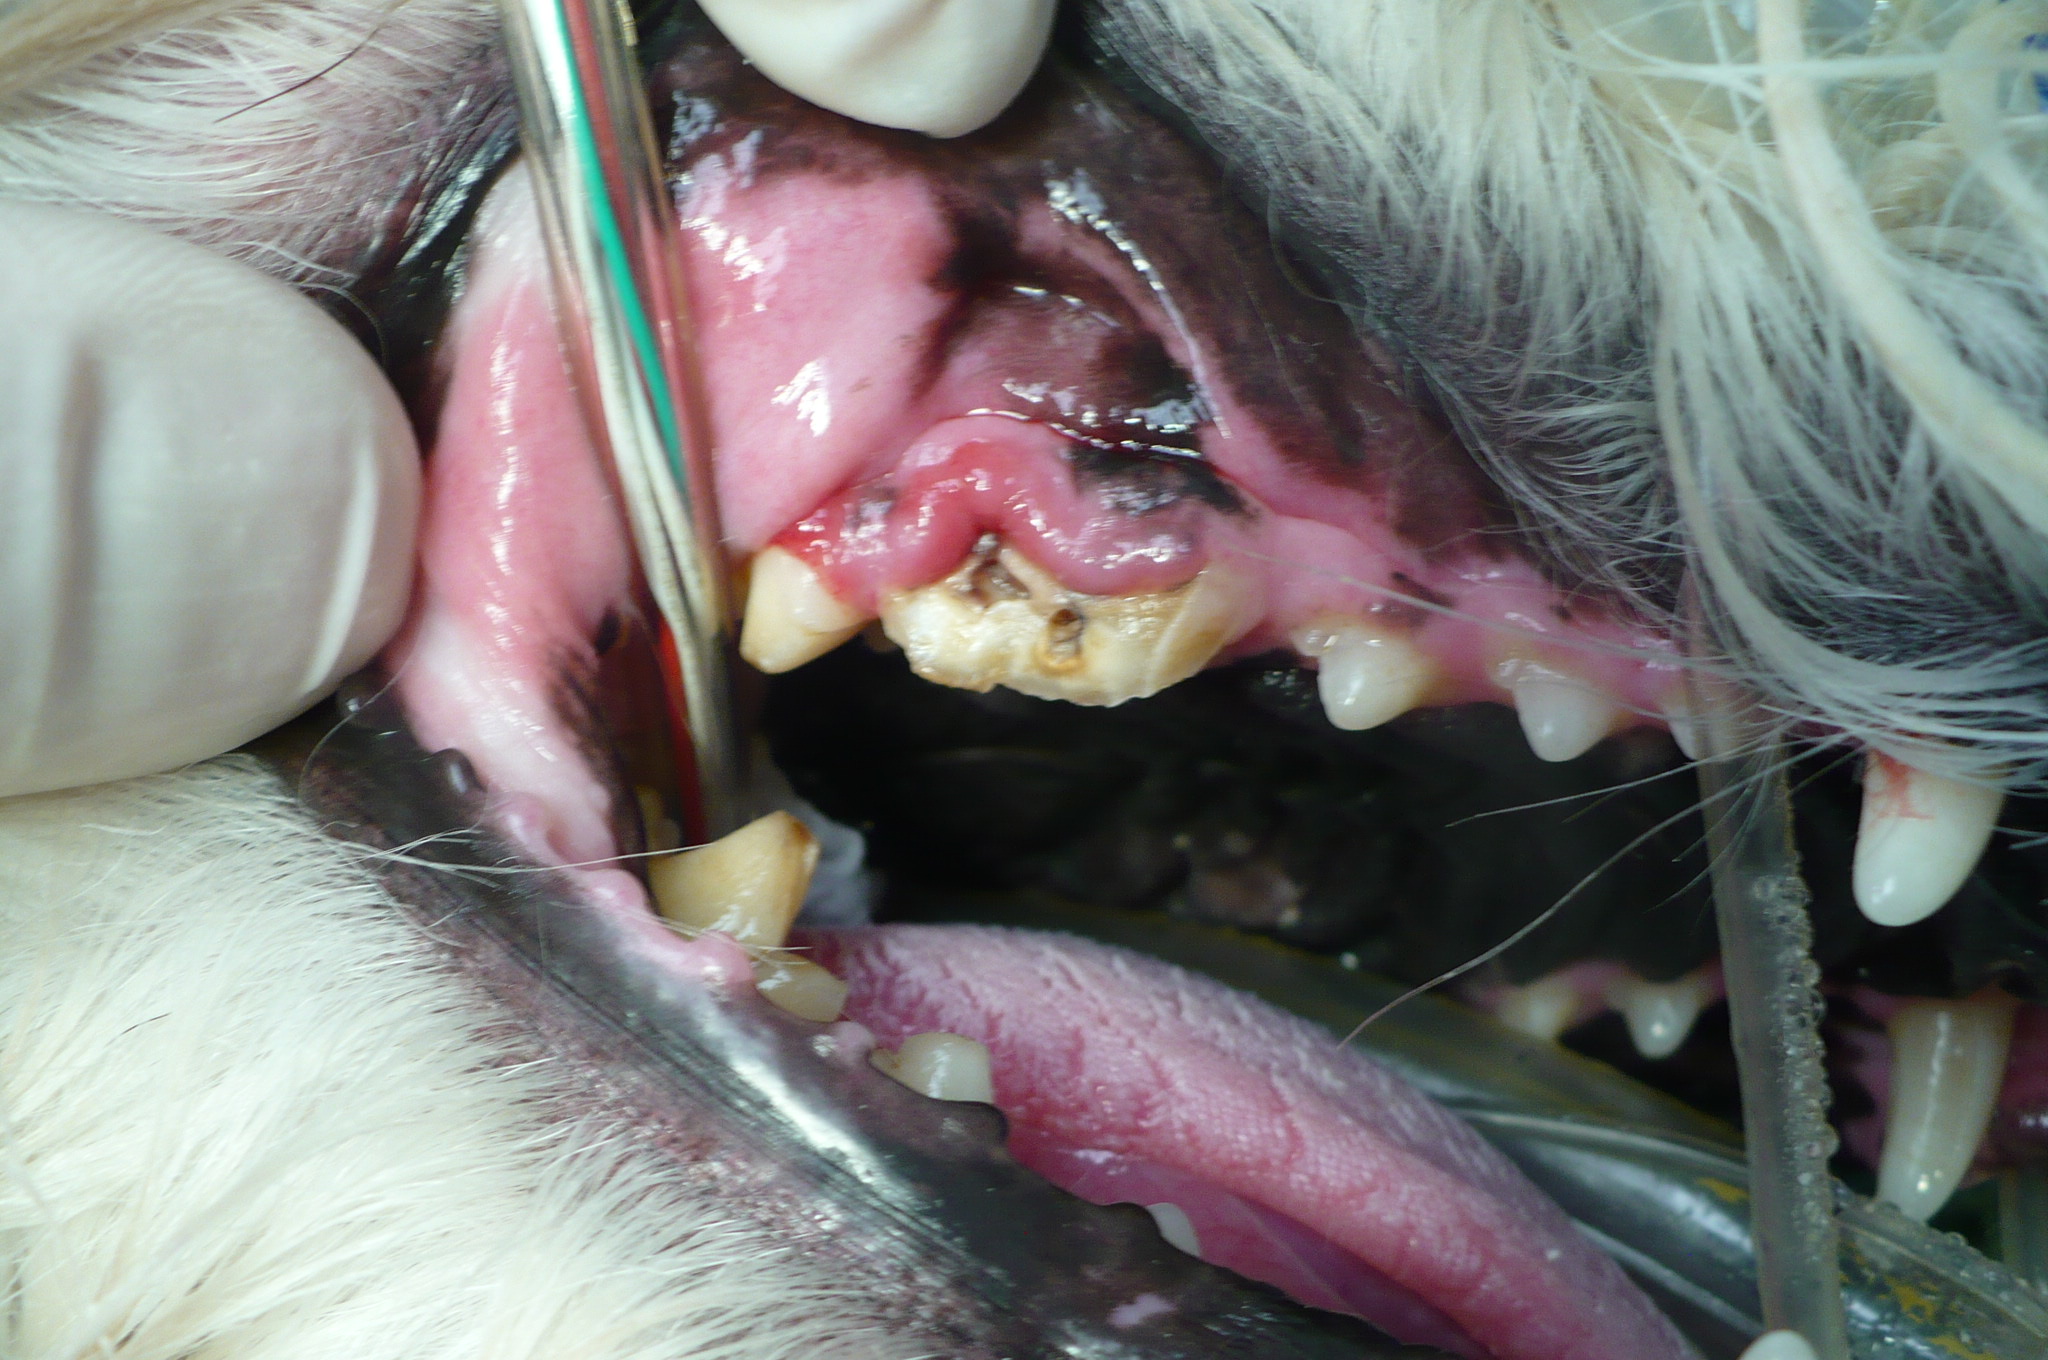 Broken molar from chewing on plastic bone